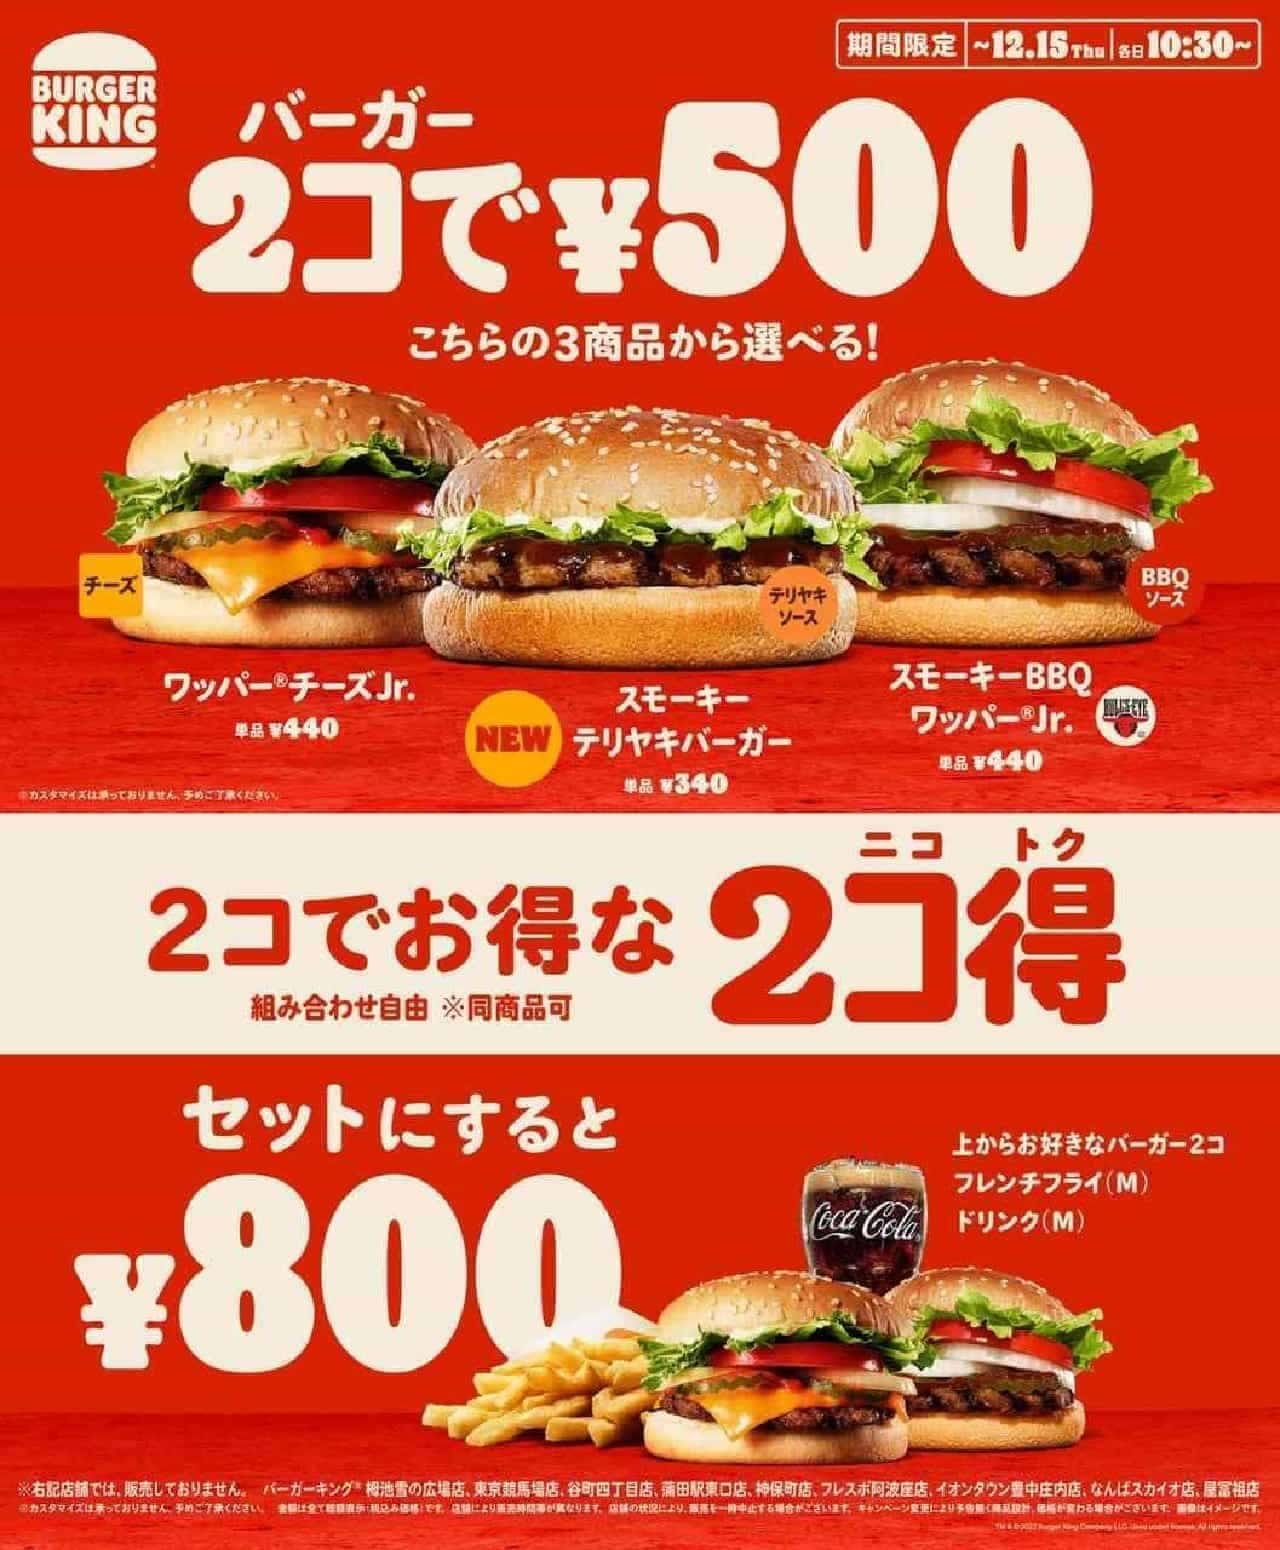 Burger King 2koku (Nikotoku) Campaign